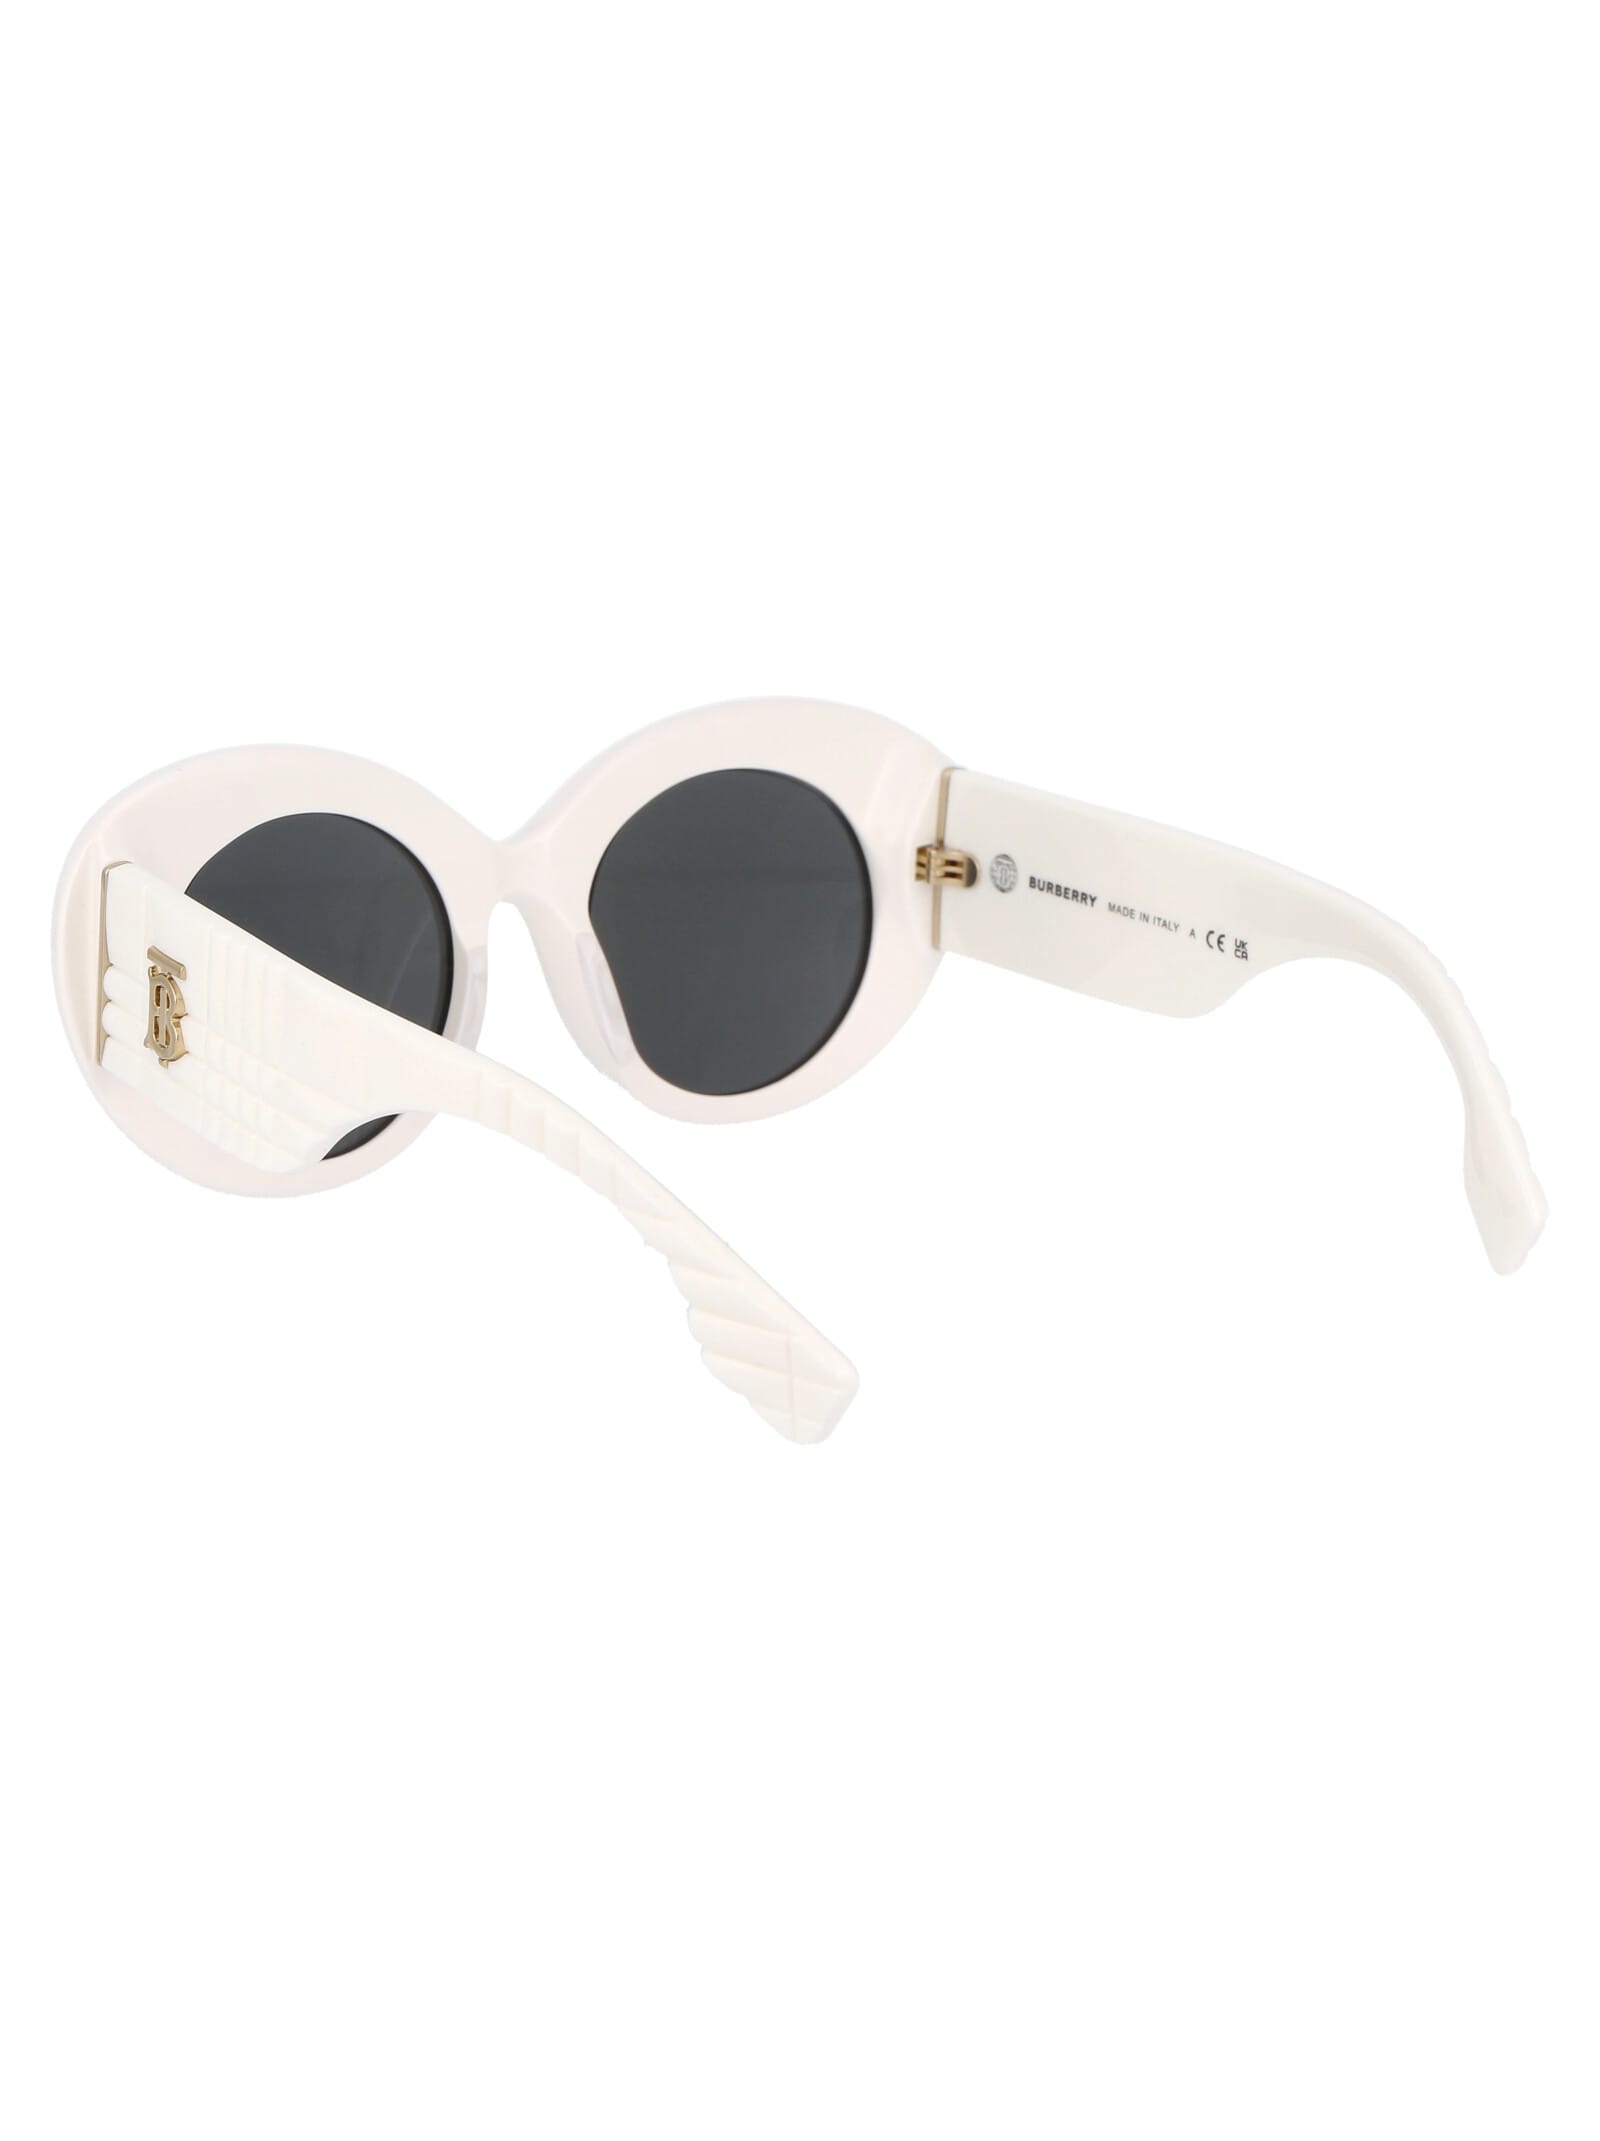 Burberry Eyewear Margot Sunglasses | italist